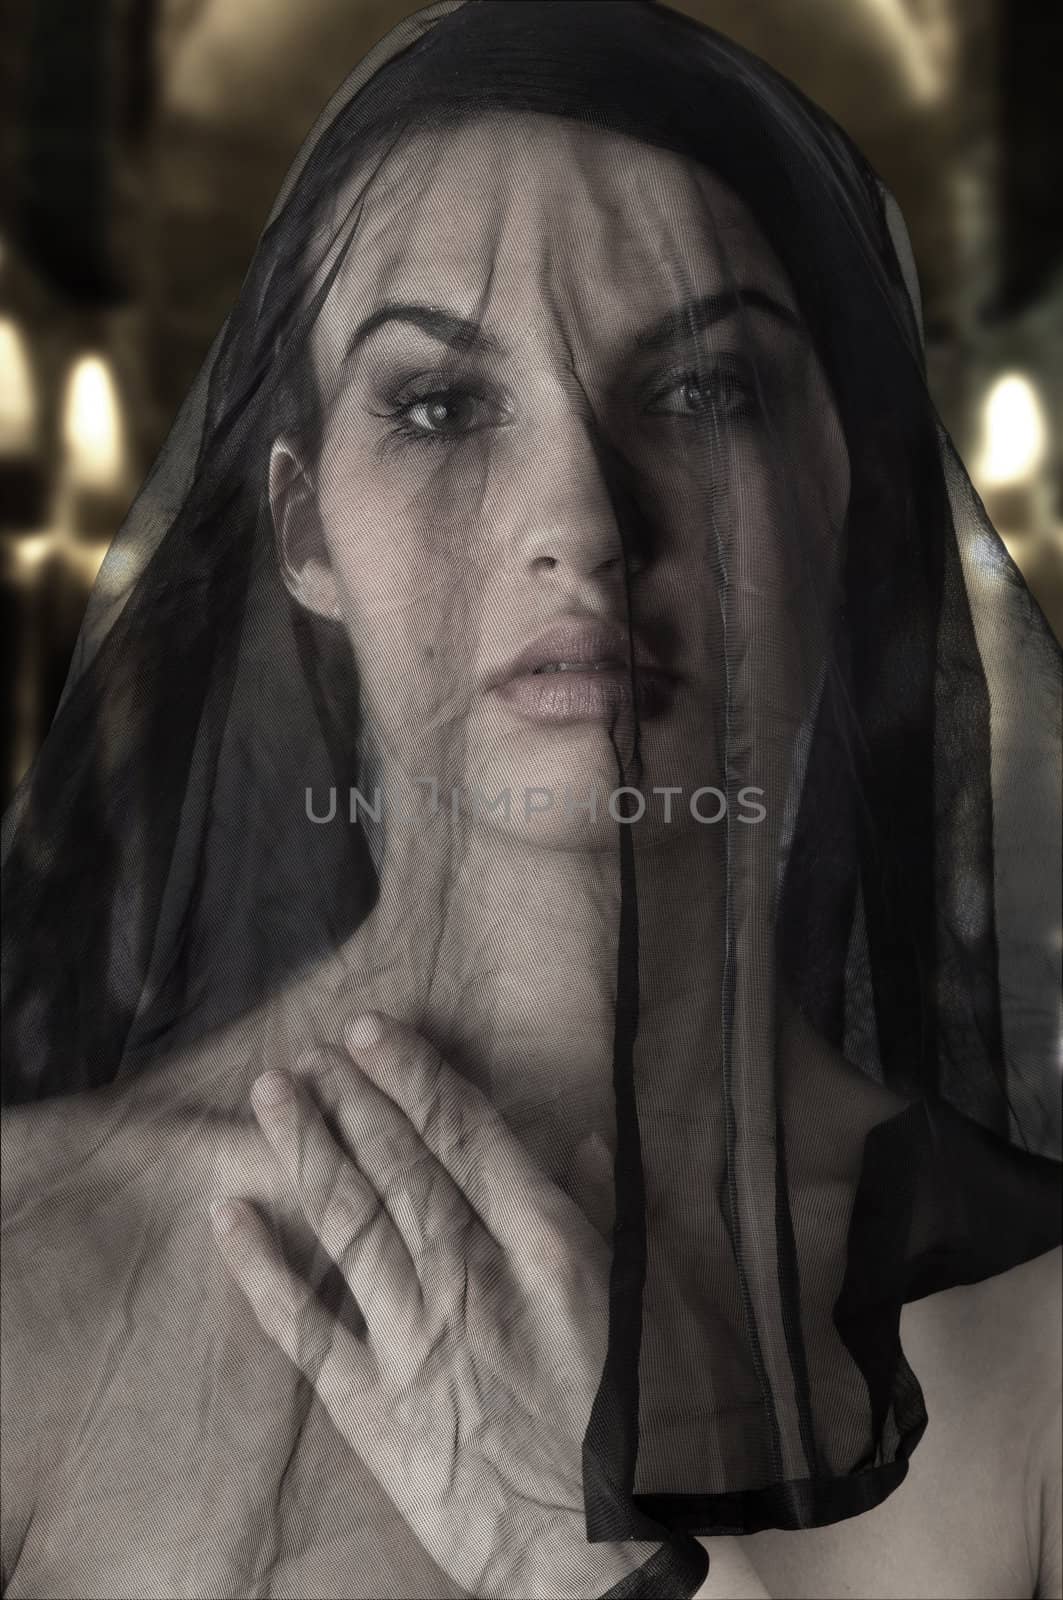 cute woman with a black transparent veil on face like a sicilian widow